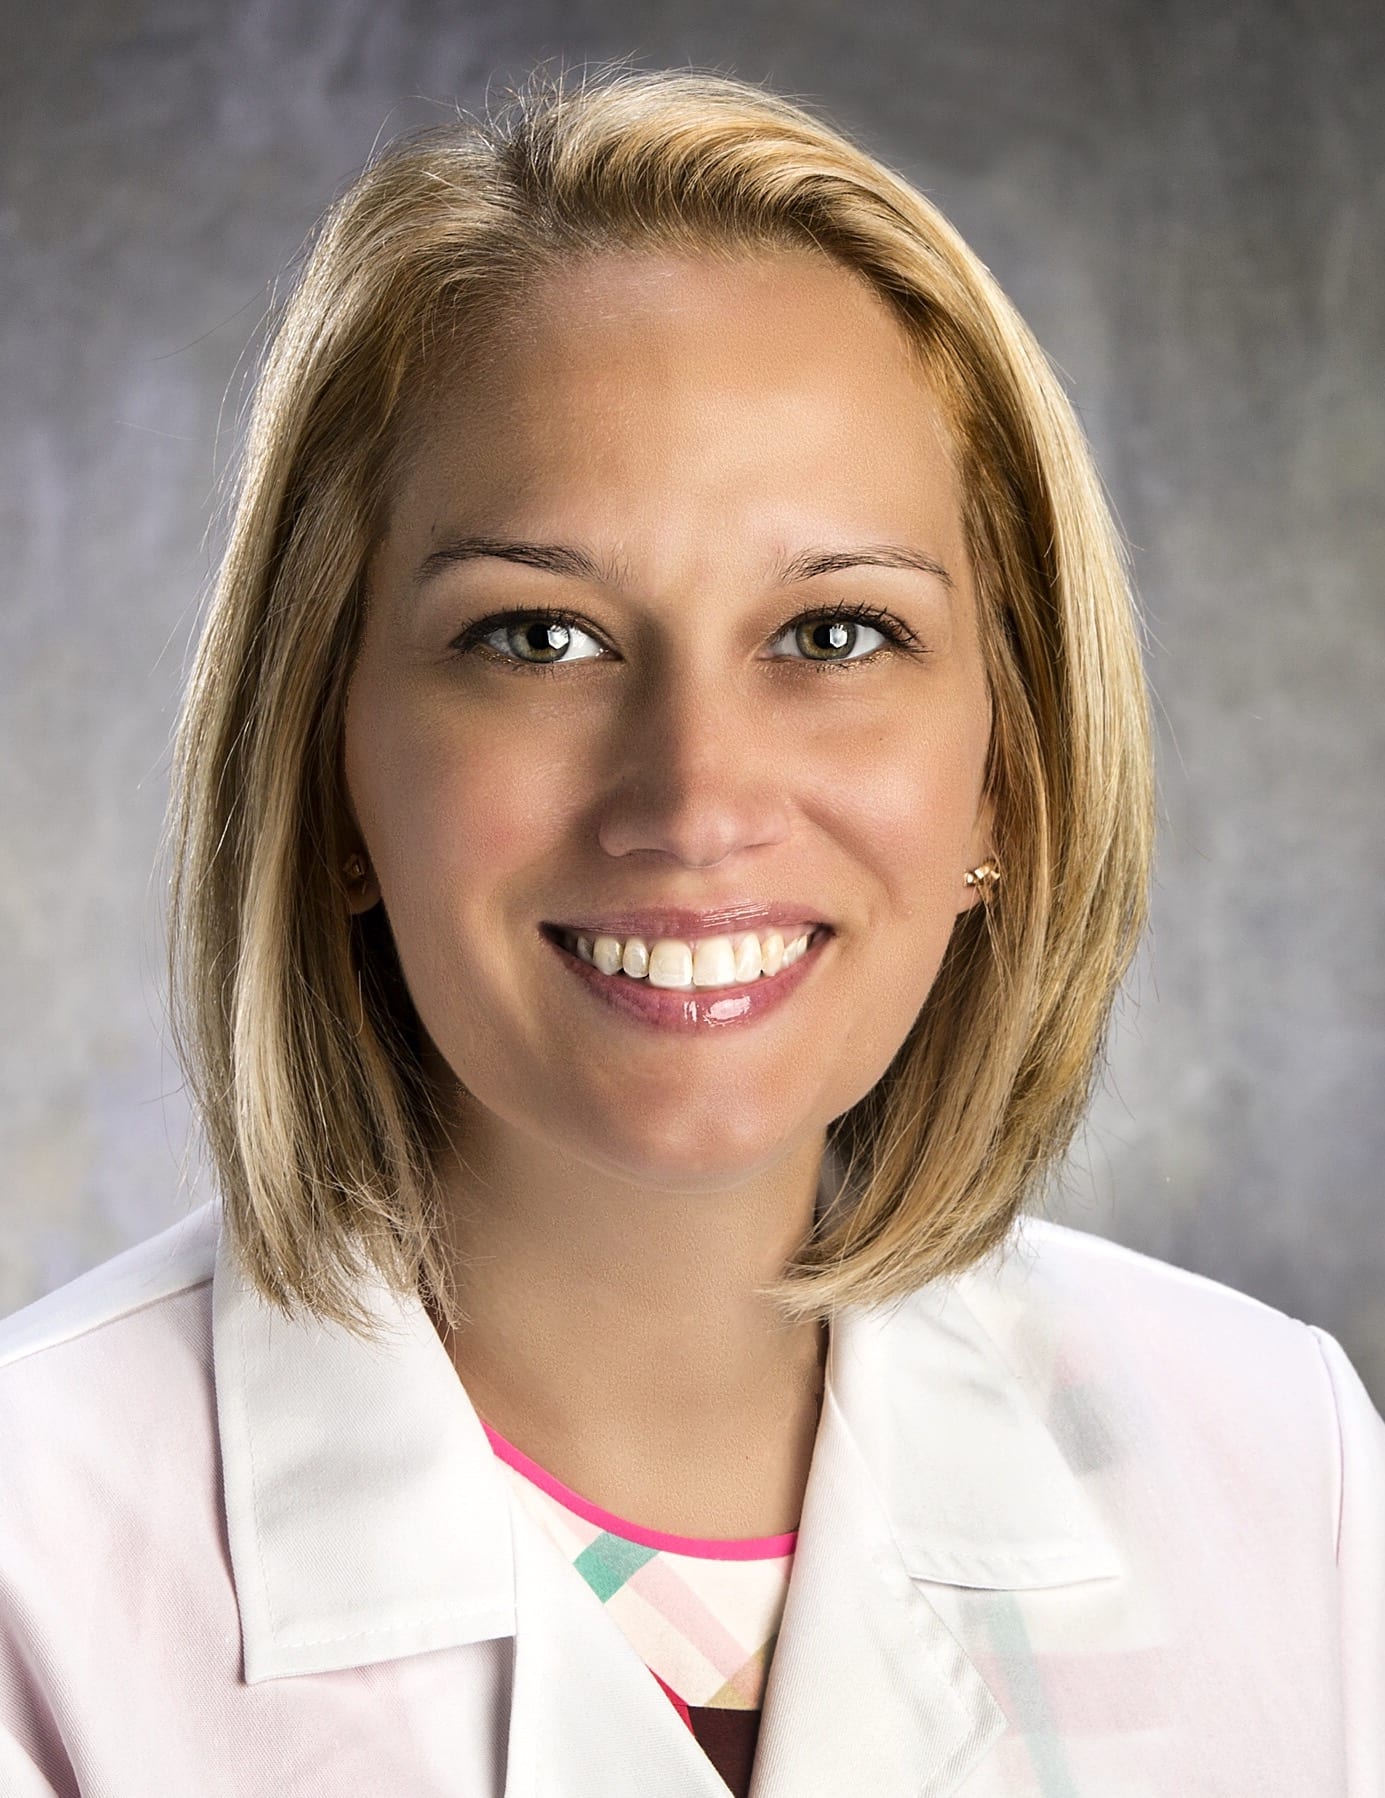 Dr. Megan Suzanne Schober MD